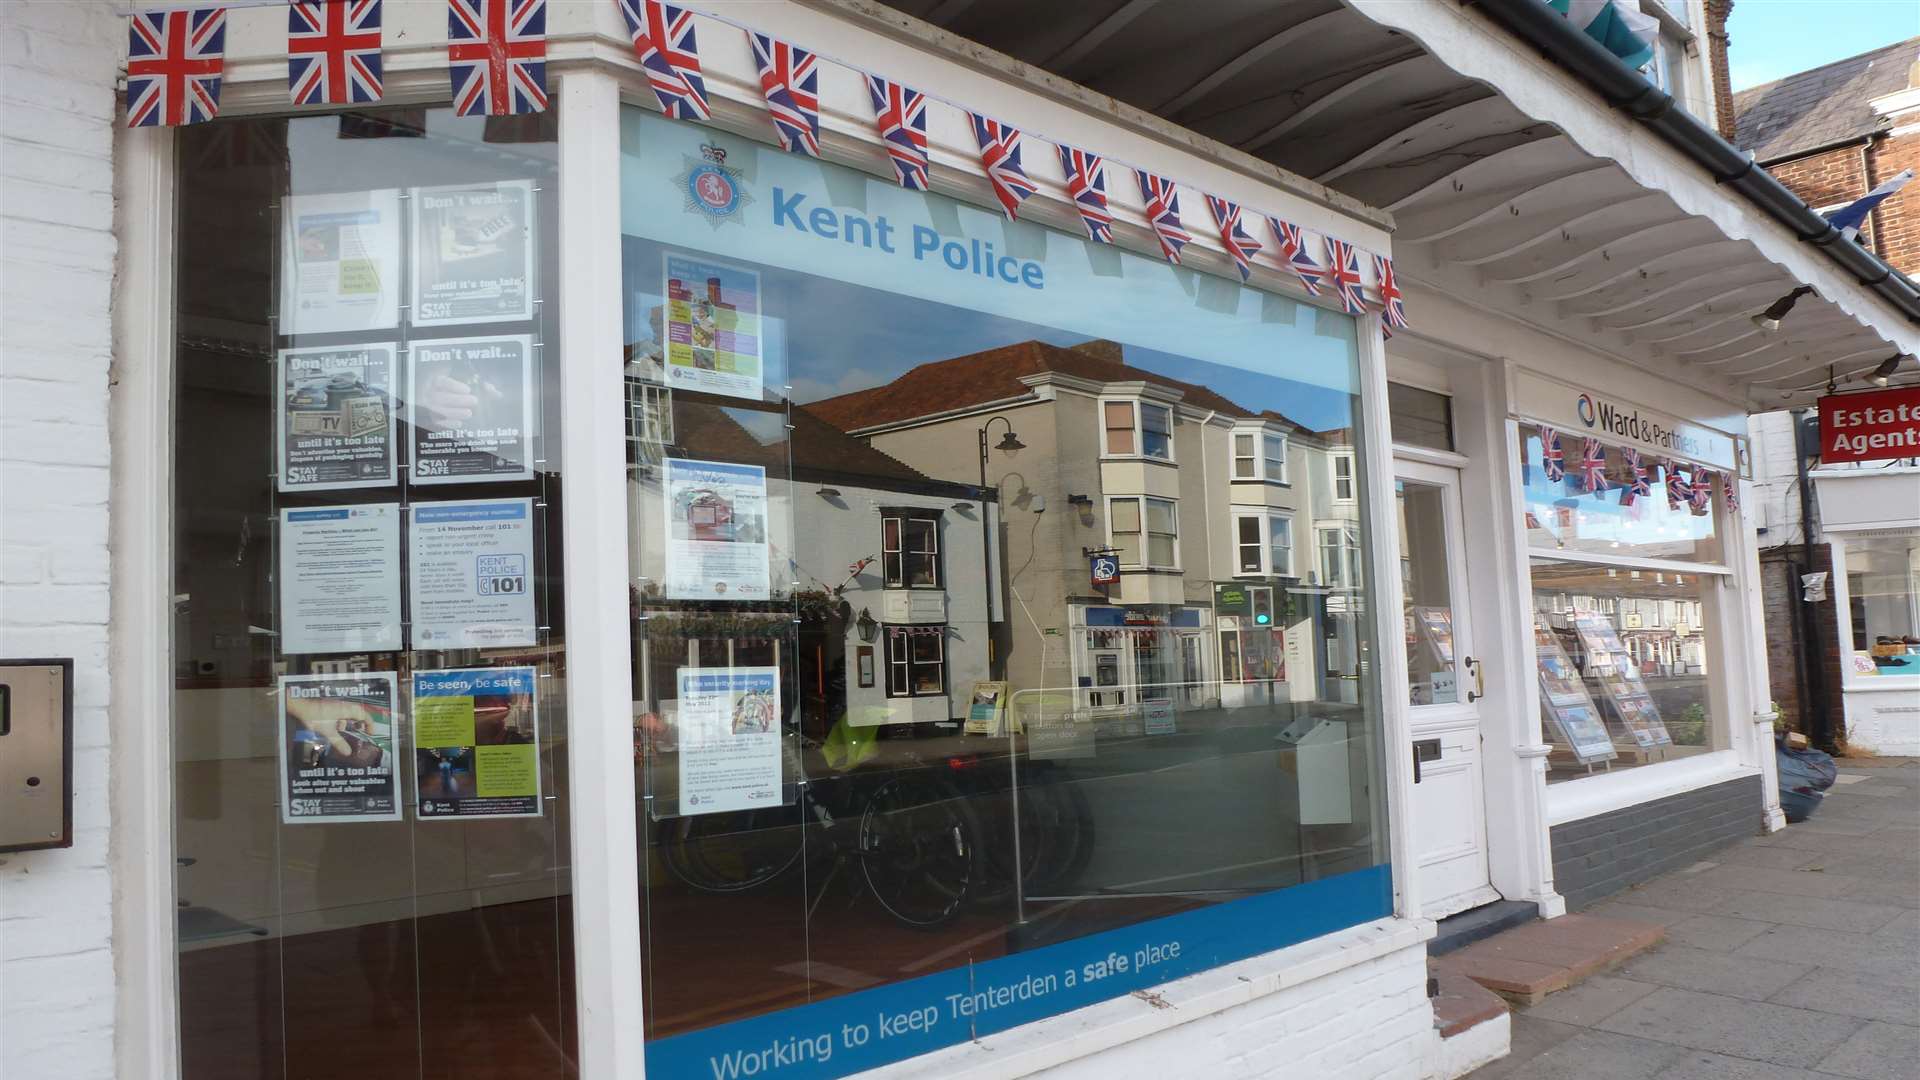 Tenterden police office closed in 2012